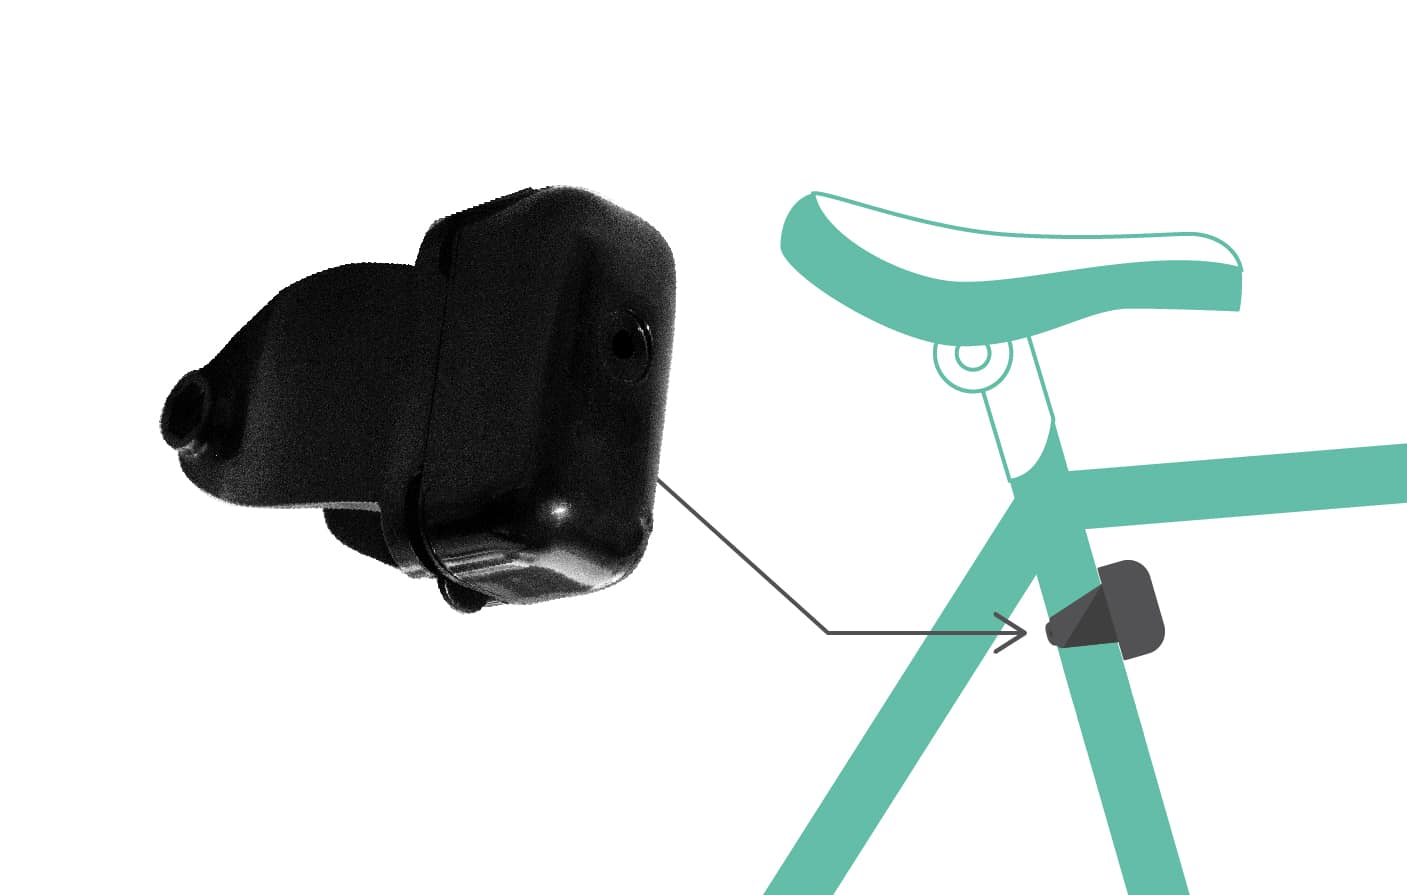 bike showing saddle sensor location